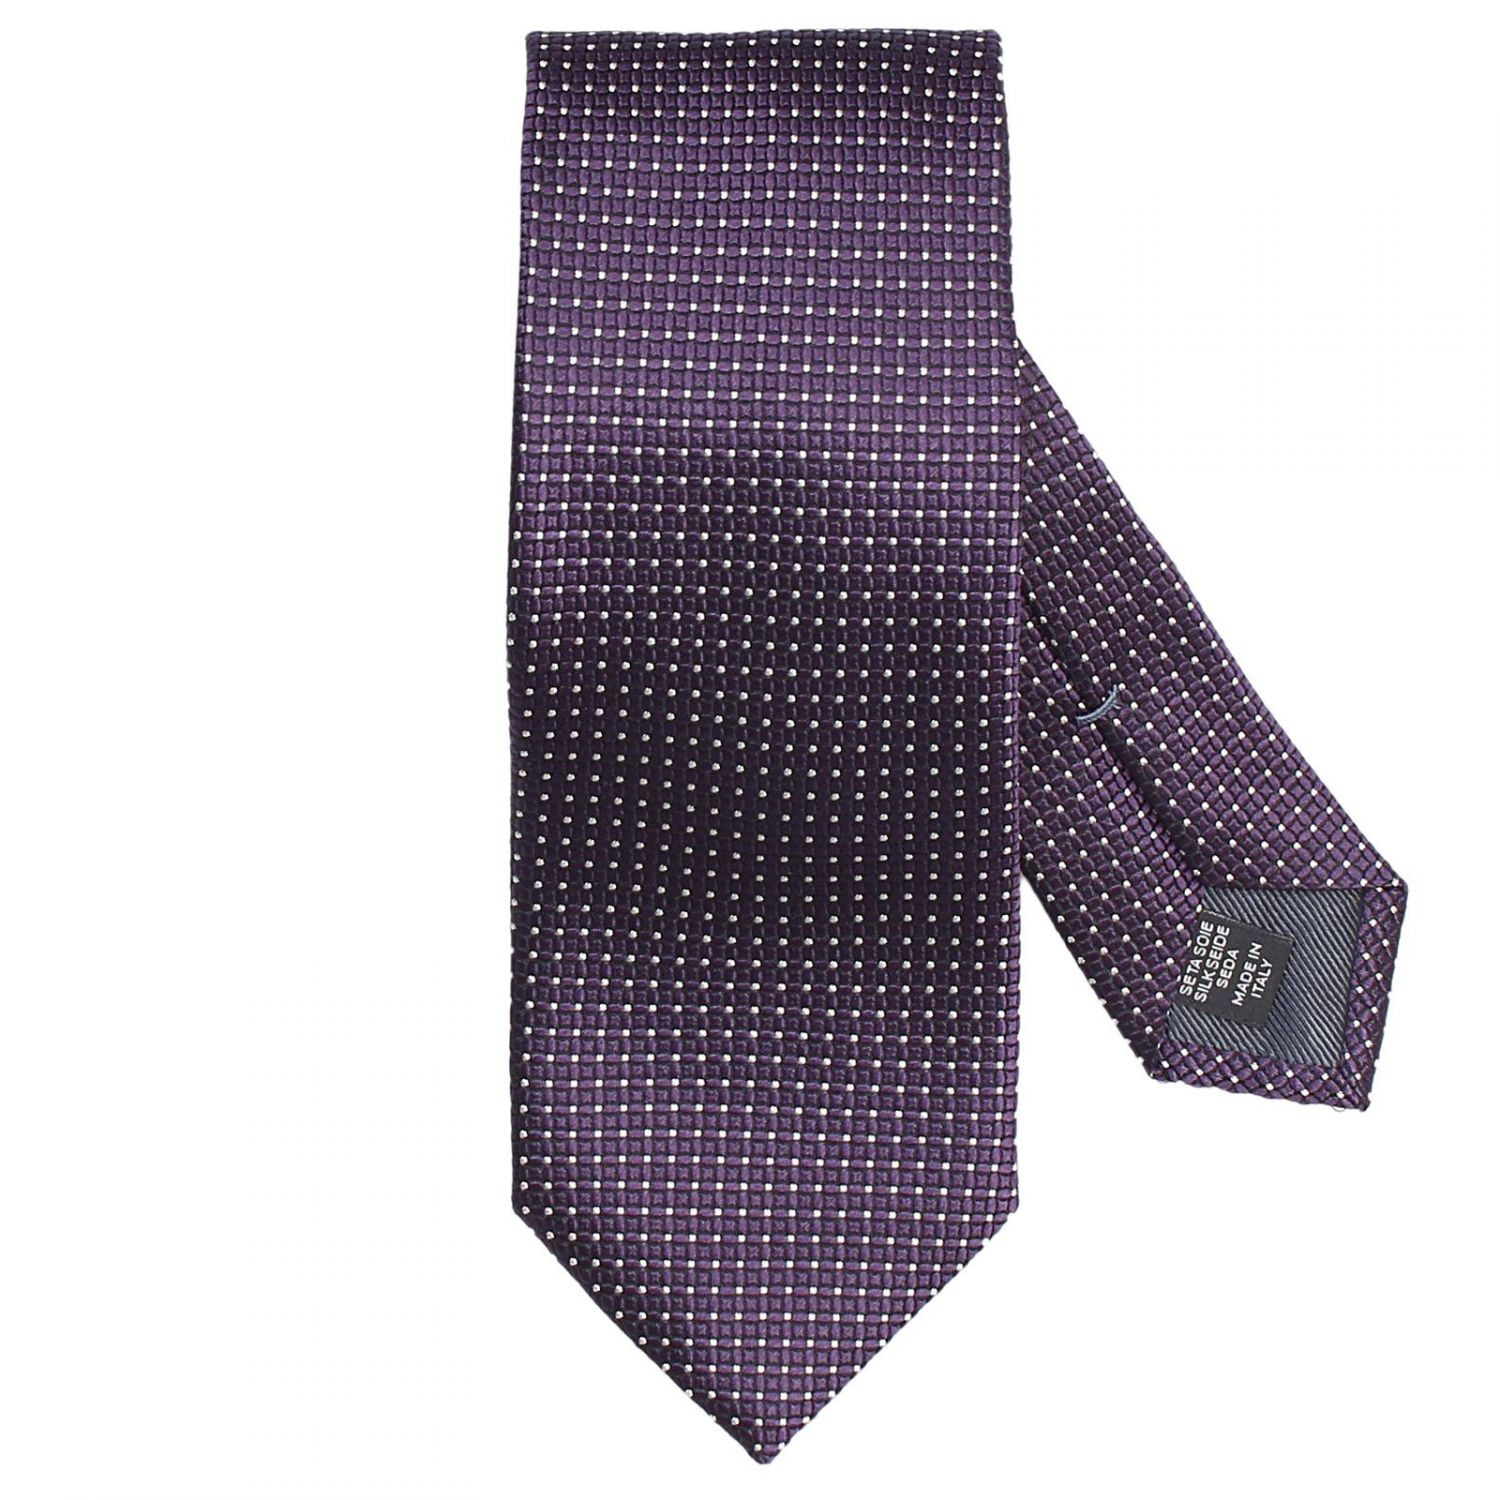 Lyst - Ermenegildo Zegna Tie Silk 8 Cm in Purple for Men